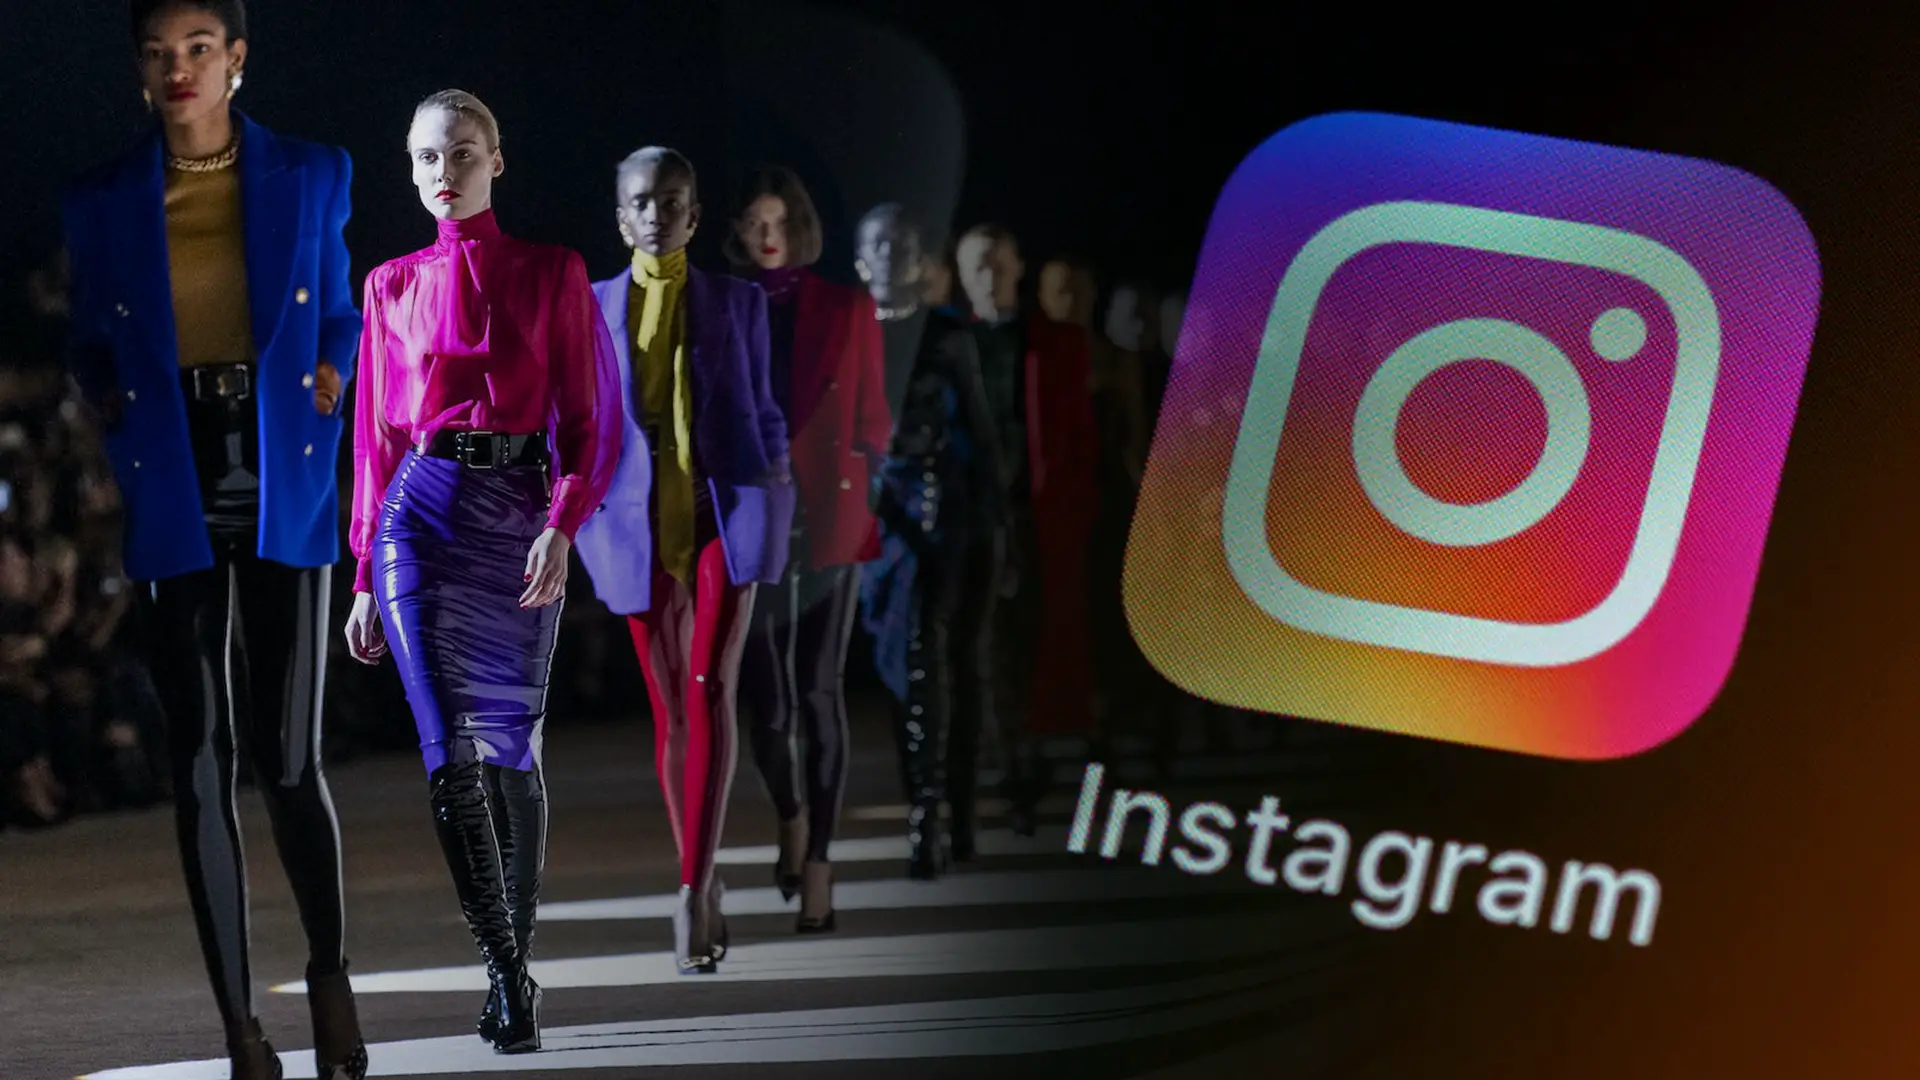 The Impact of Social Media on Fashion